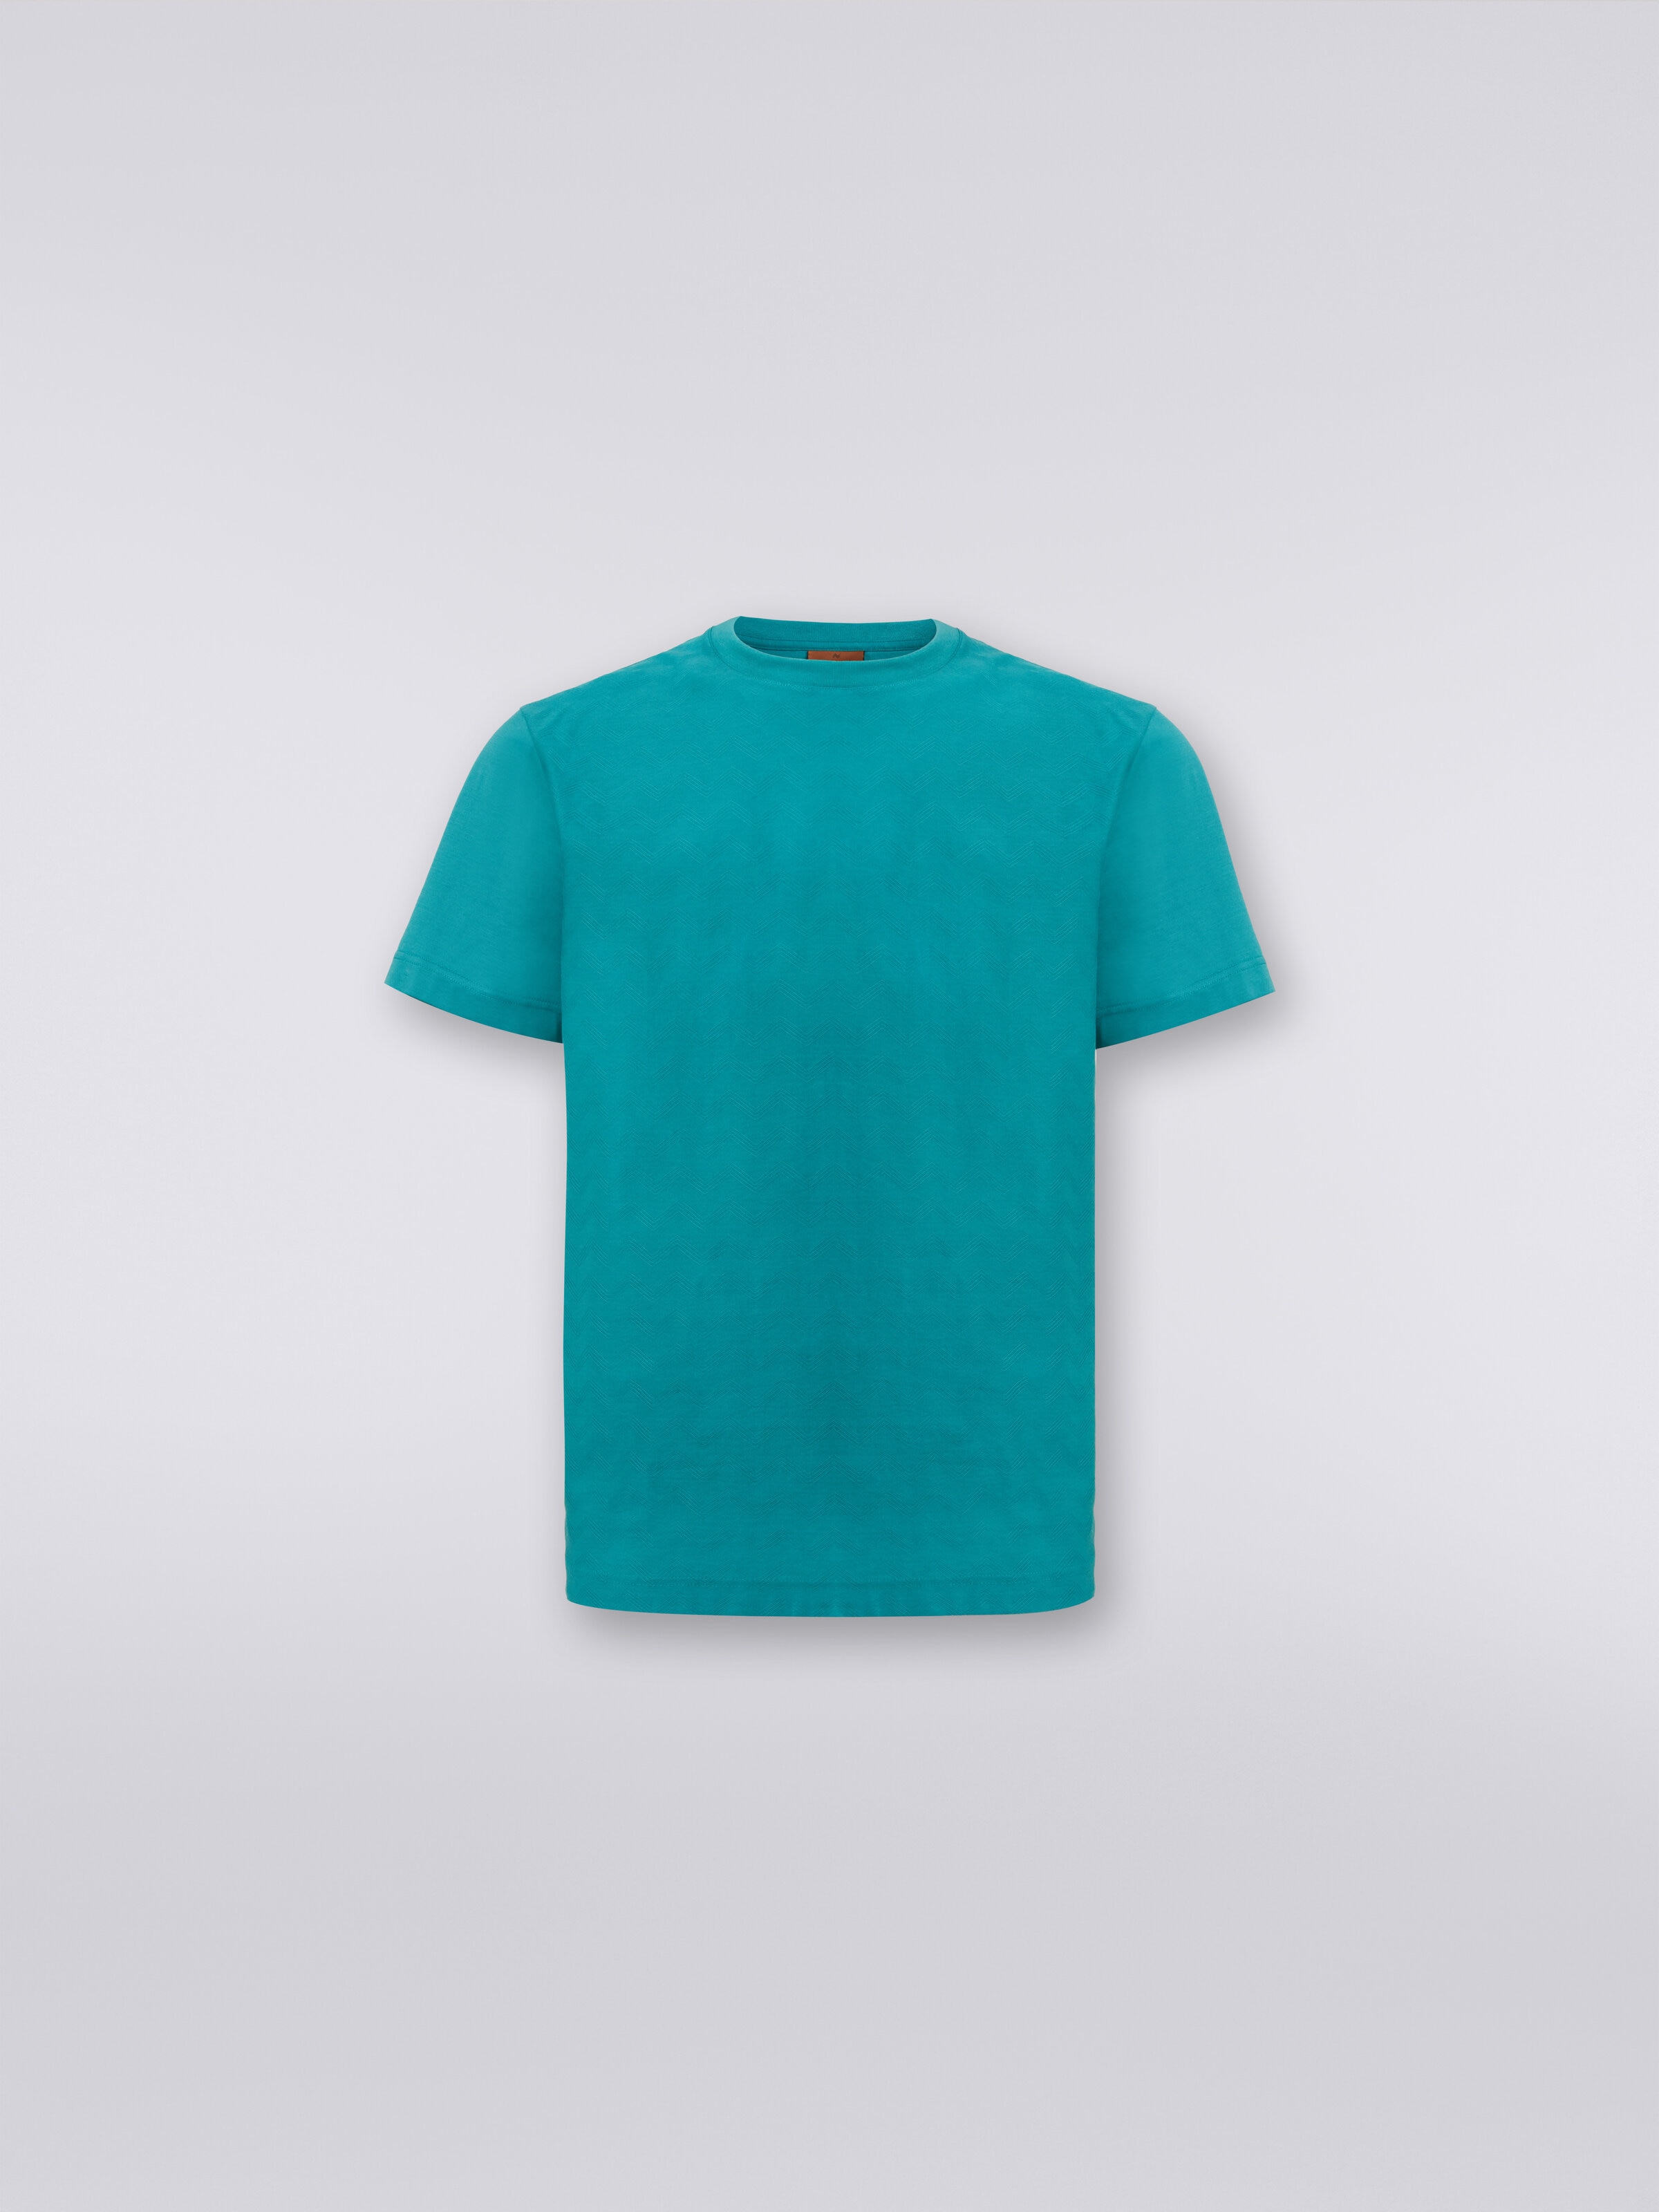 Kurzärmeliges Baumwoll-T-Shirt mit Zickzackmuster, Grün  - 0